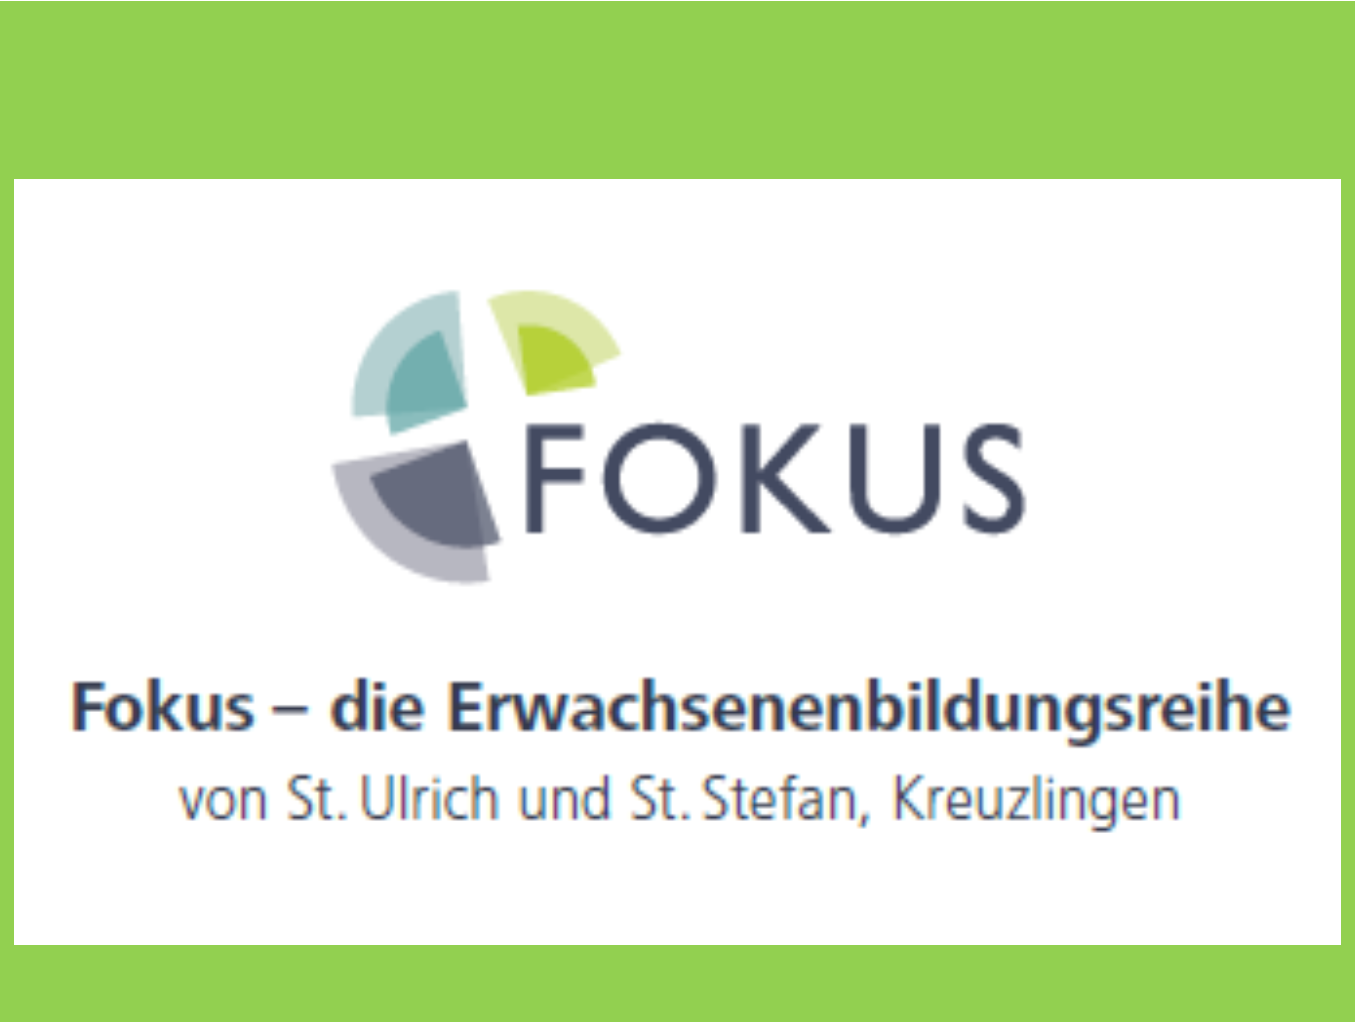 Logo Fokus